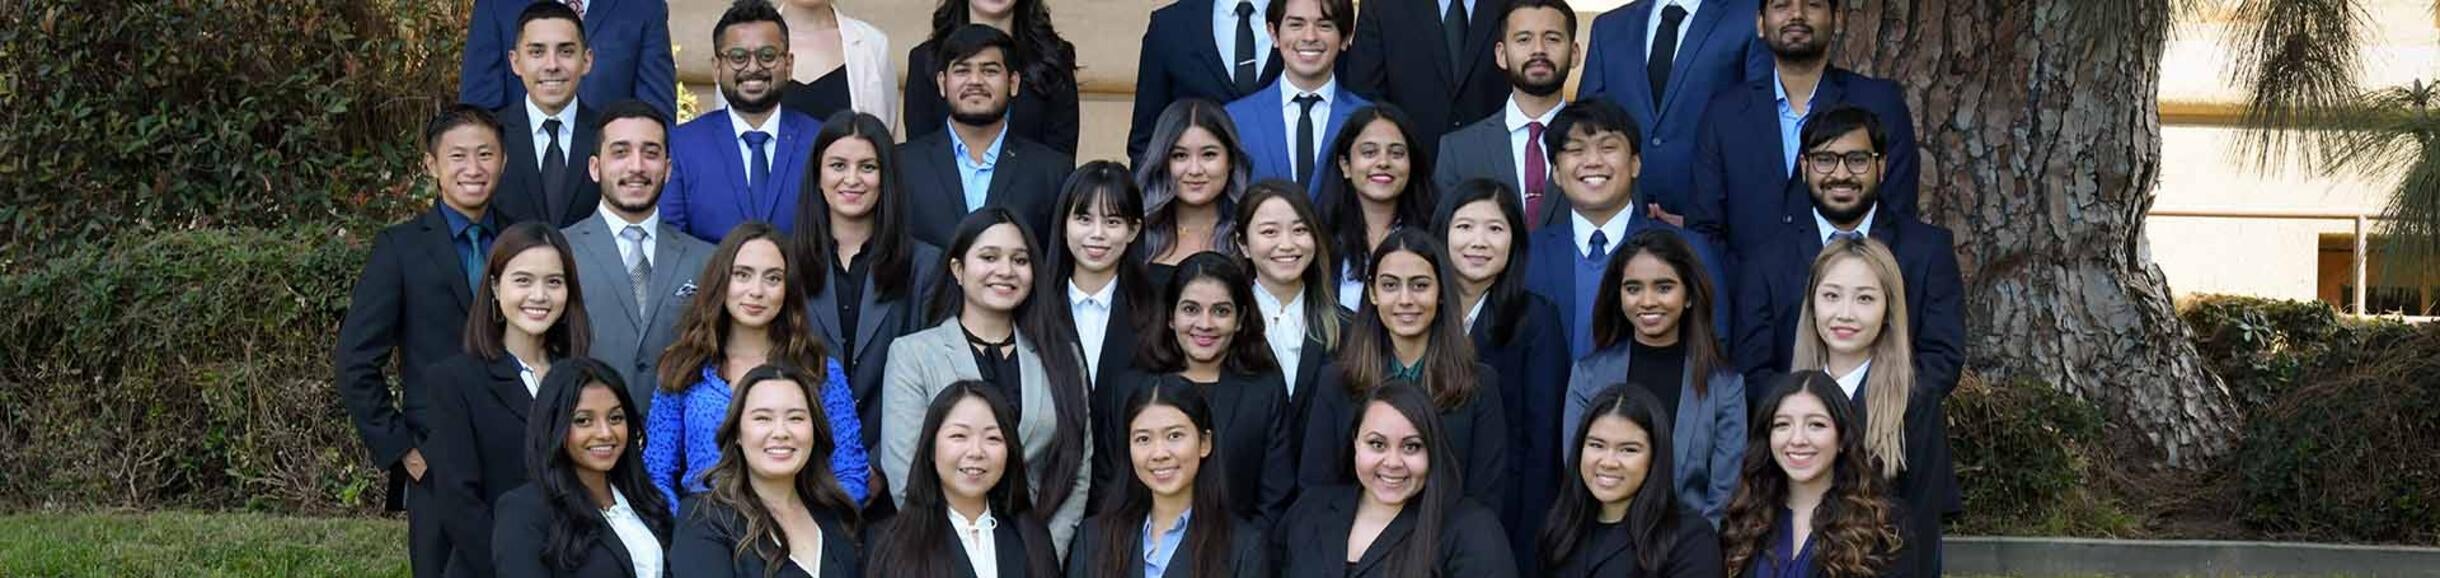 UCR Business graduate students